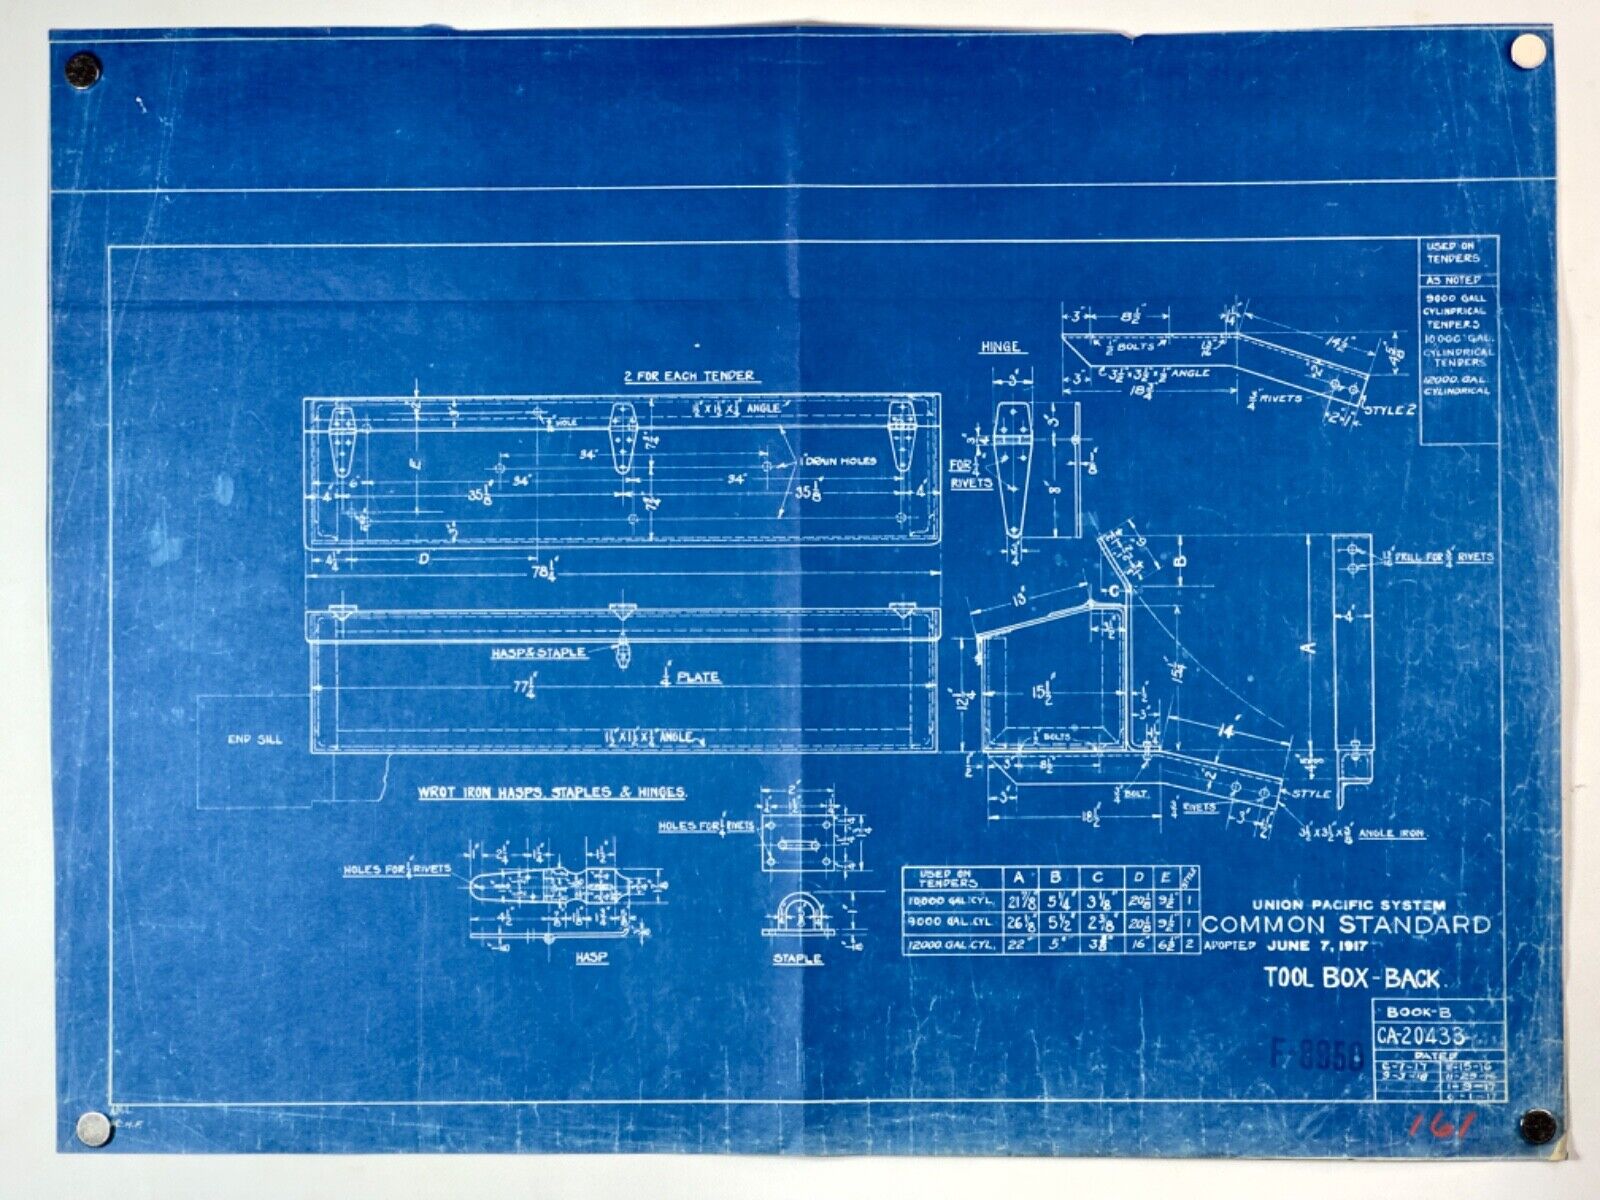 1917 Union Pacific Blueprint- Common Standard Tool Box - Back - 20\'\' x 15\'\'